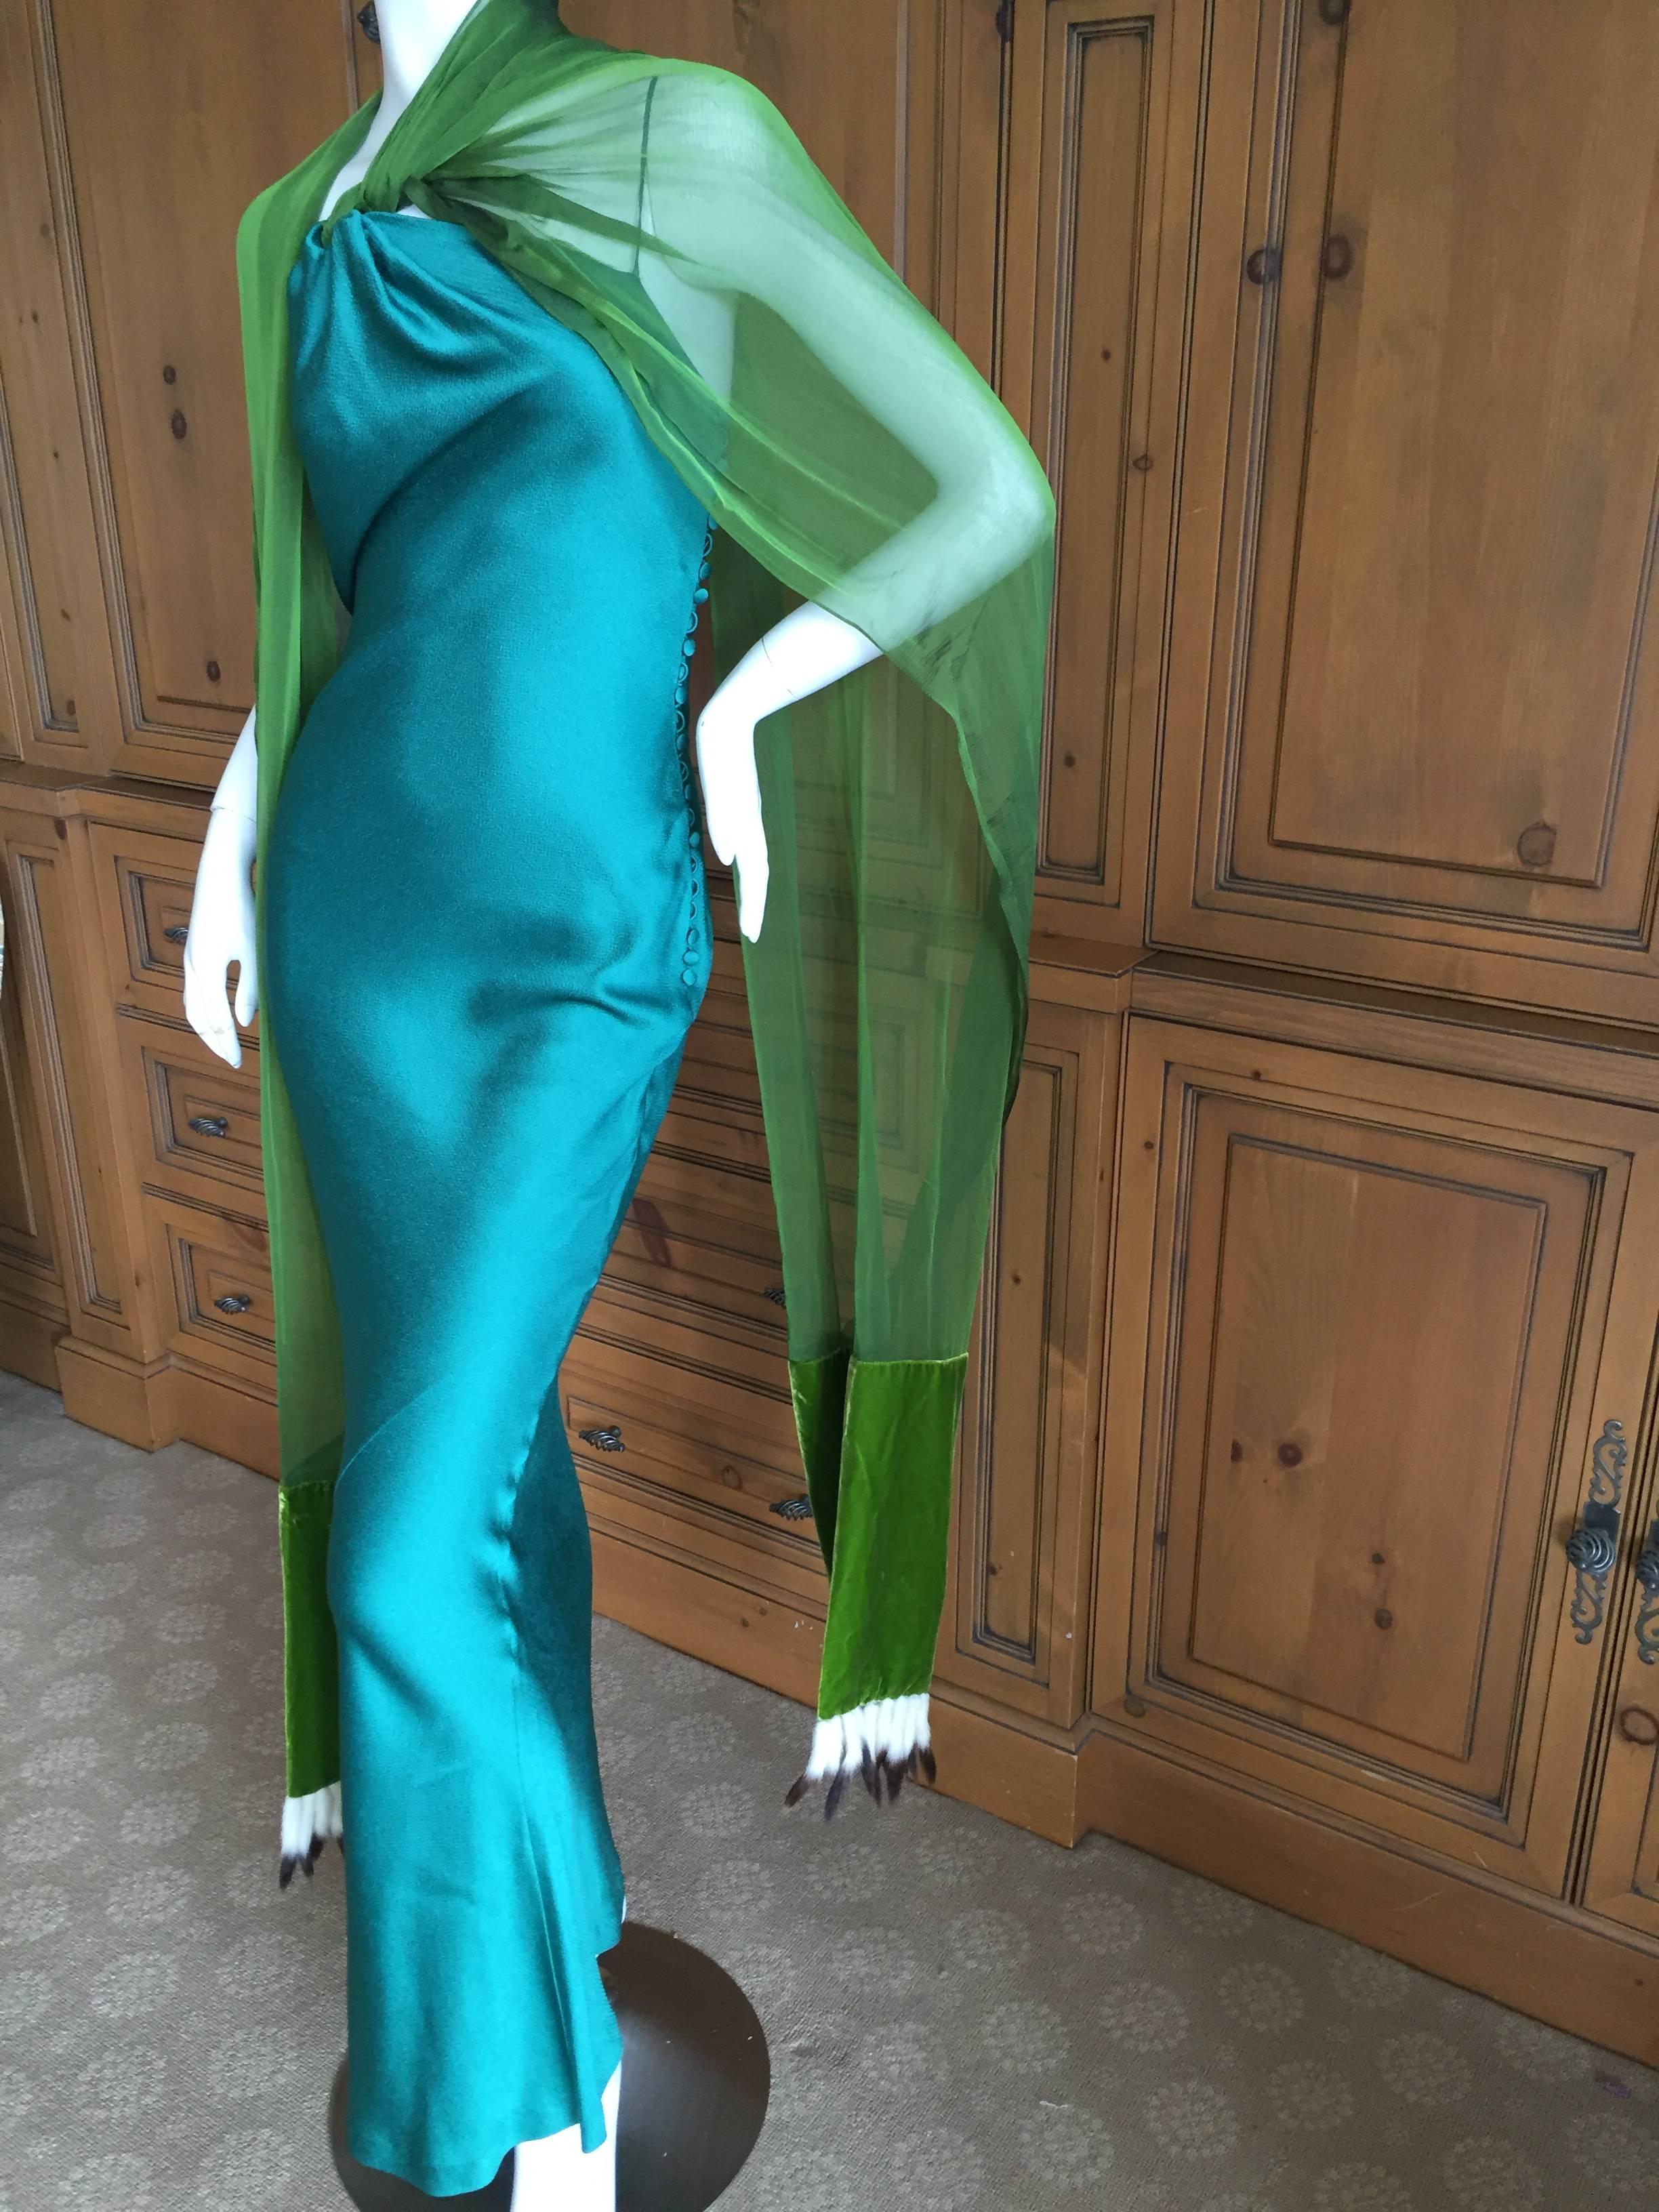 Women's Christian Dior by Galliano Bias Cut Green Dress w Ermine Tail Trim Scarves 1990s